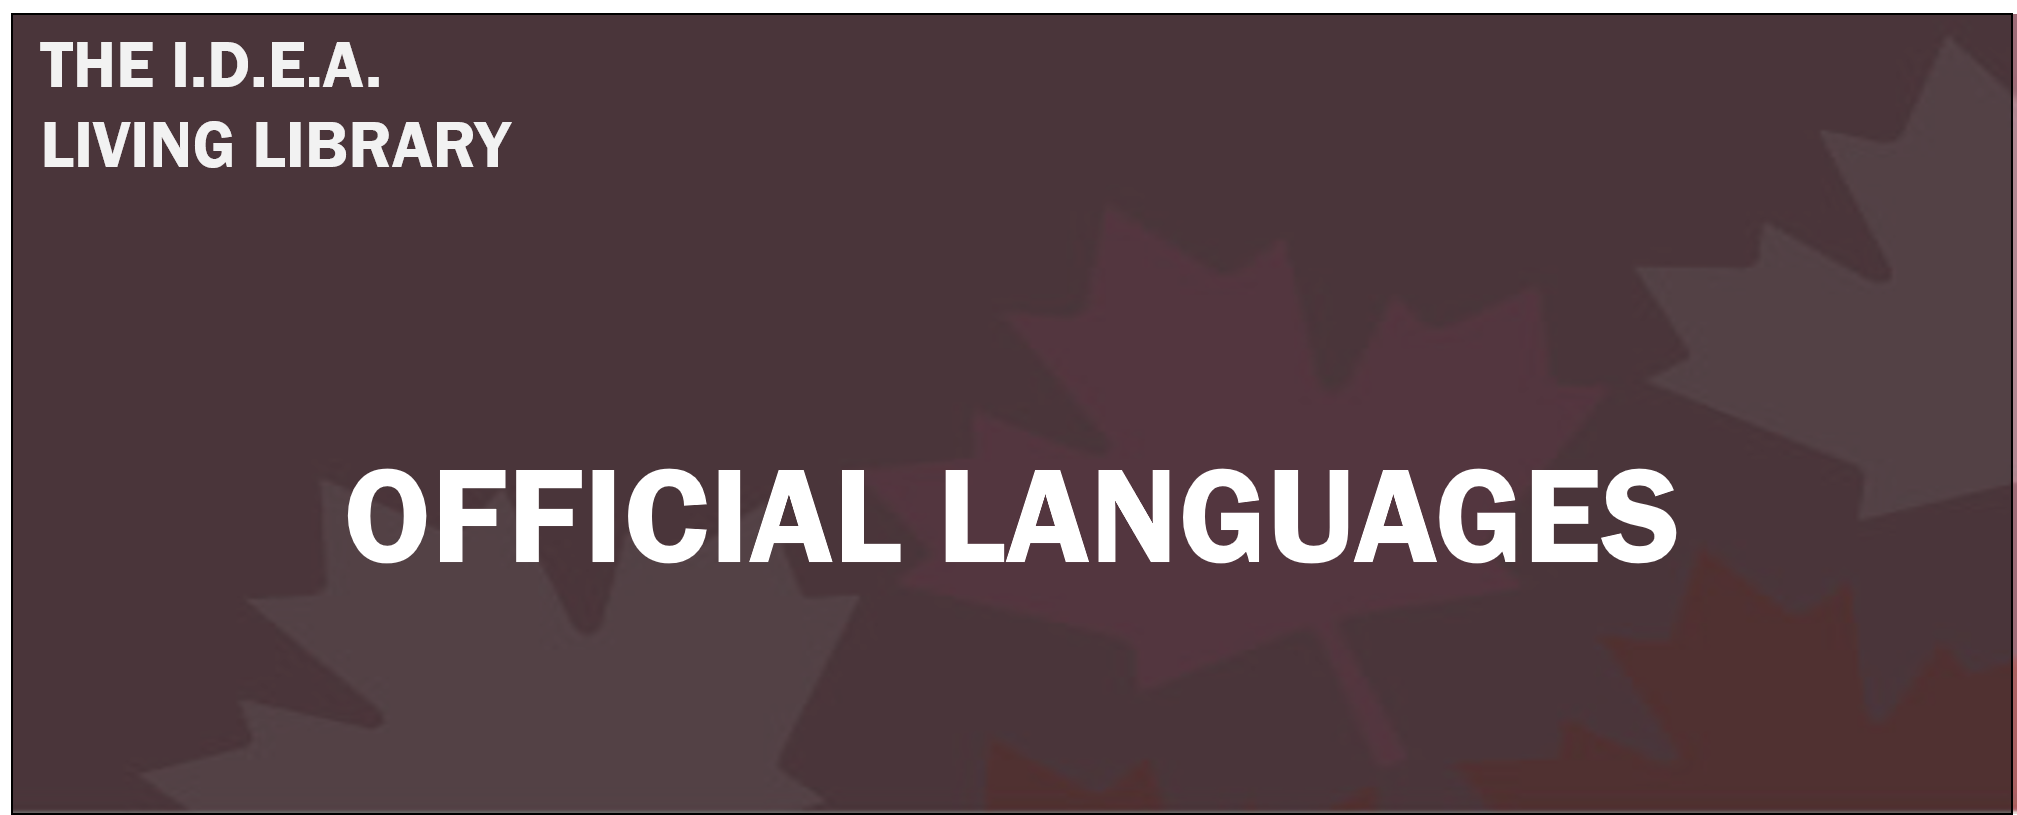 Official Languages Catalogue Banner.png